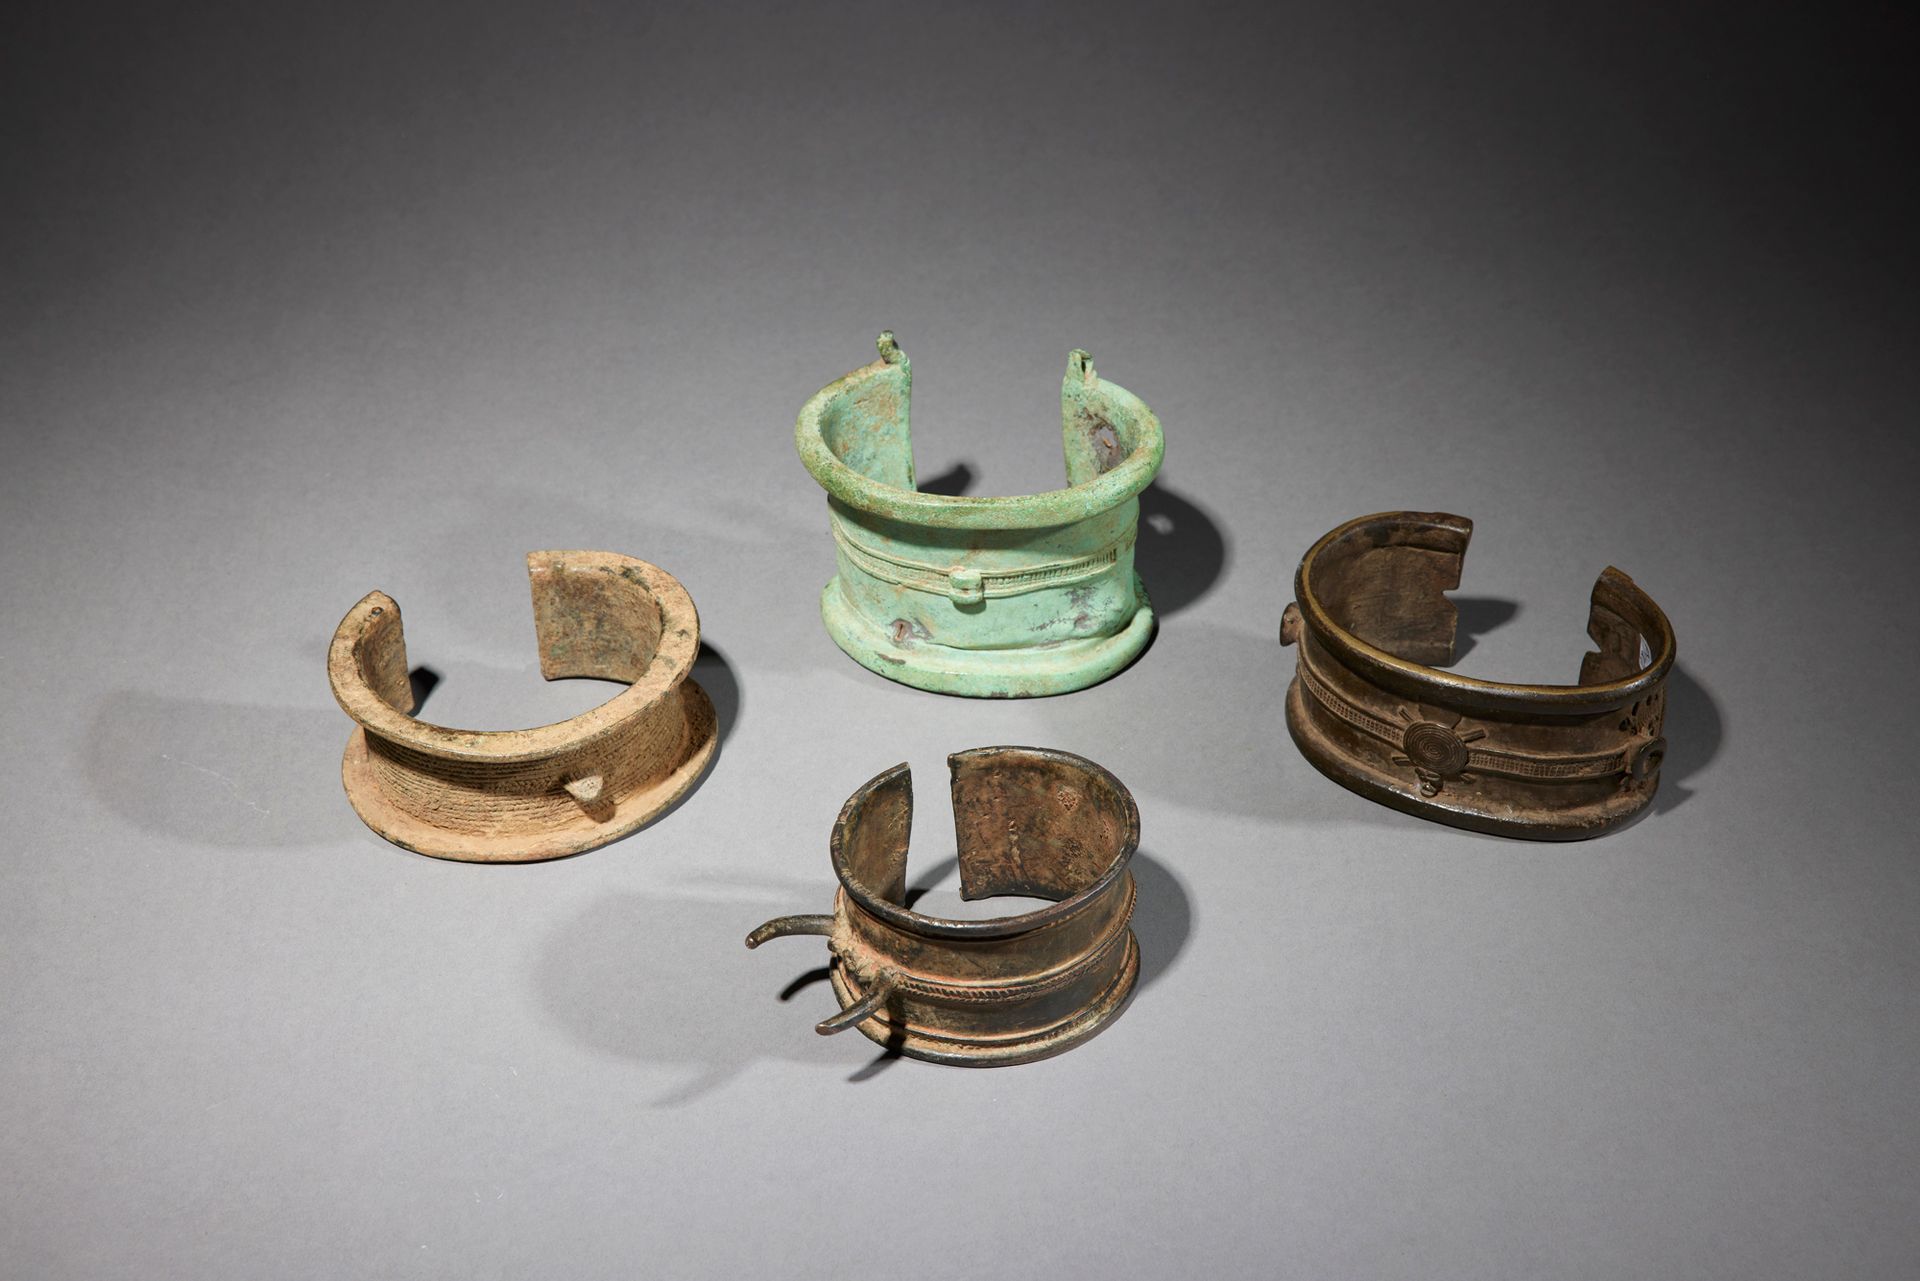 Null 四个Senufo手镯

象牙海岸

铜质

长8至10.6厘米



一套四件Senufo青铜手镯，袖口形式，有浮雕装饰。